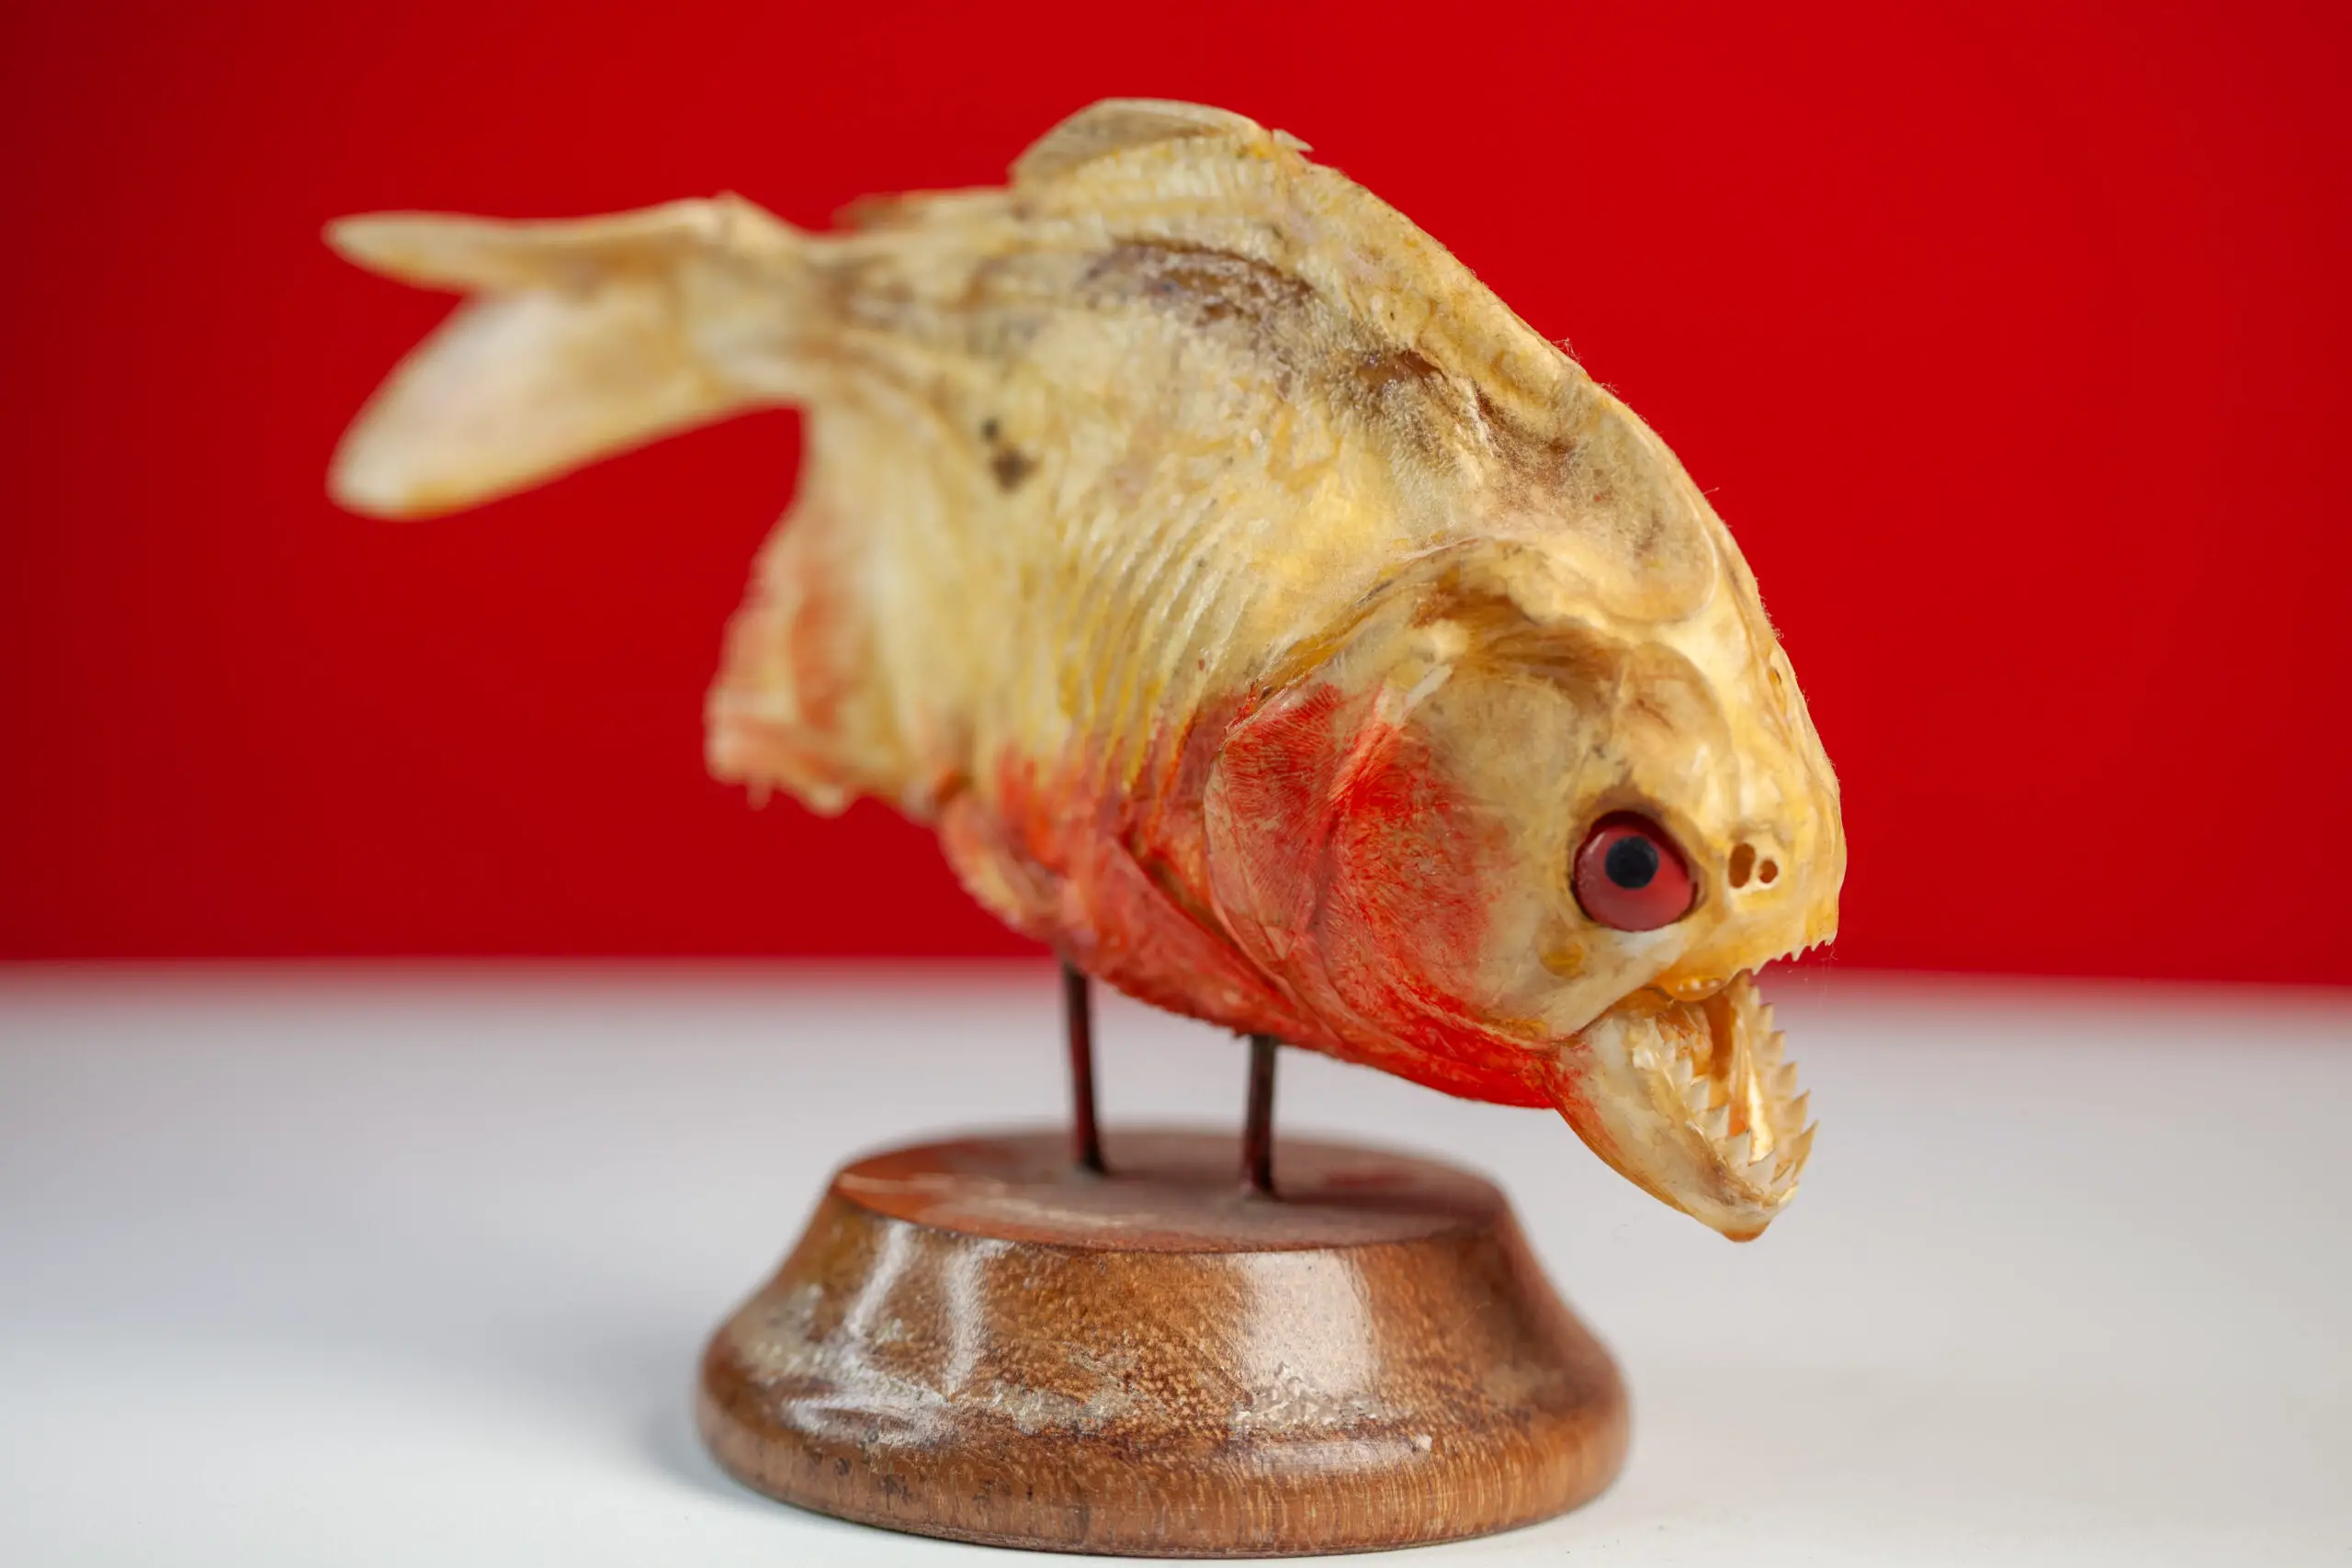 Piranha figurine on a wooden stand